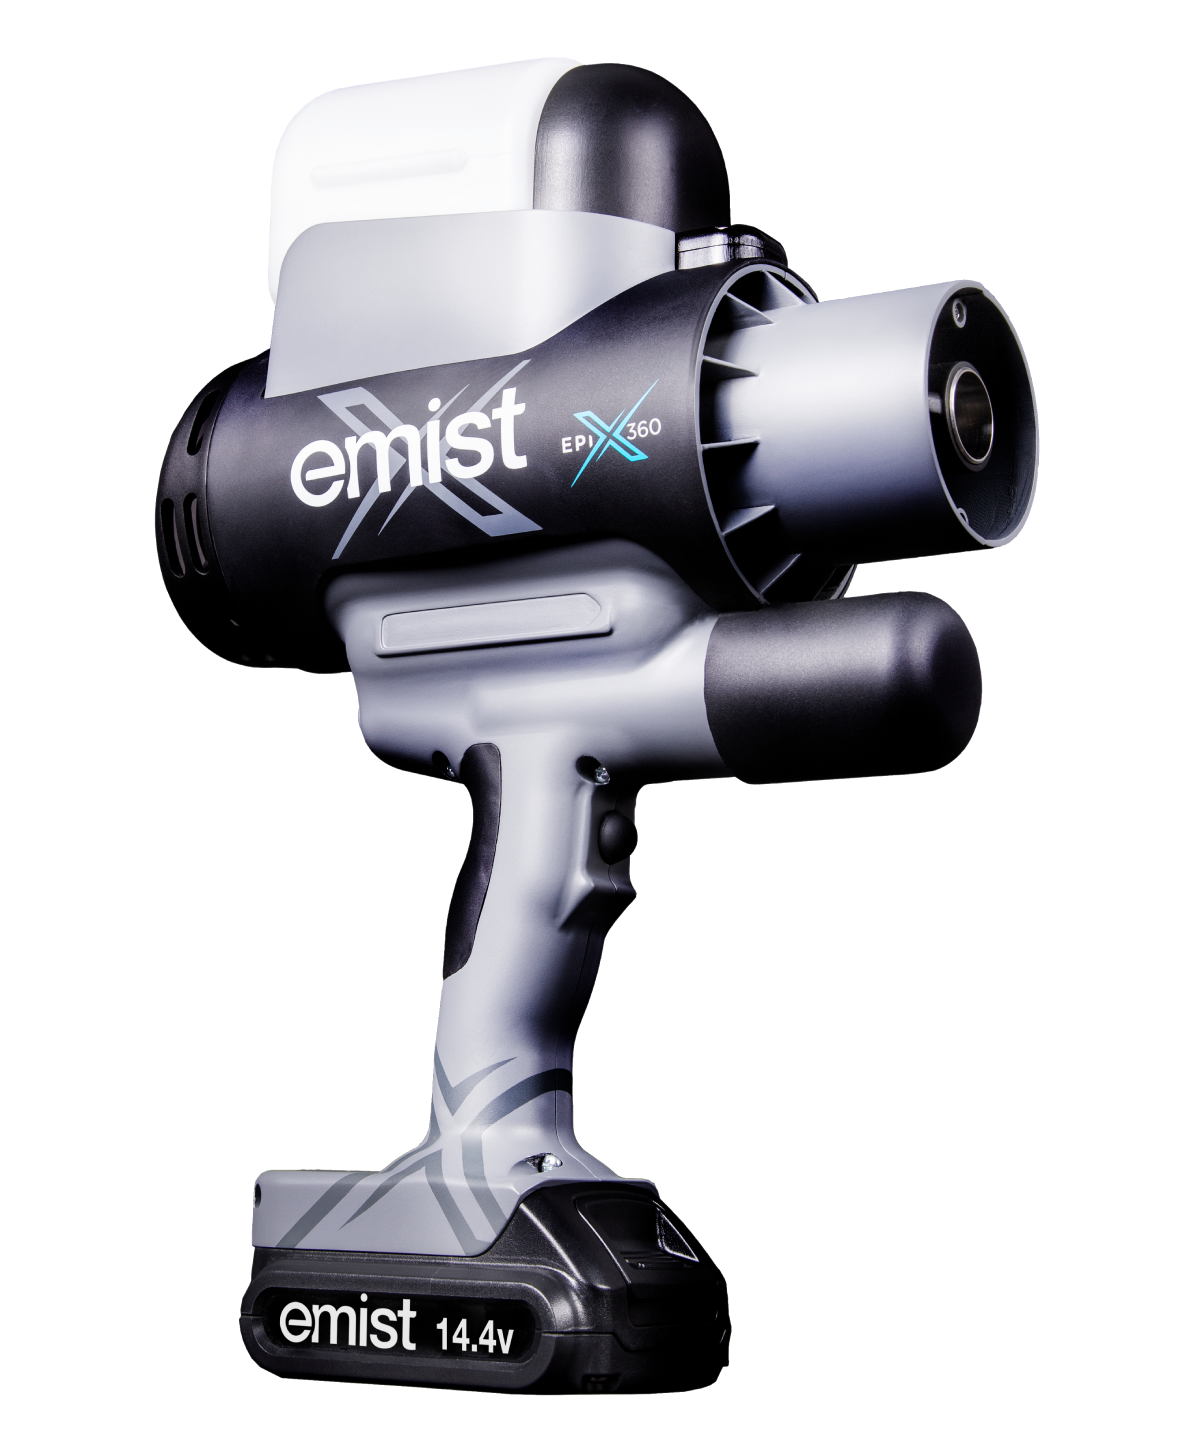 epix360 electrostatic sprayer